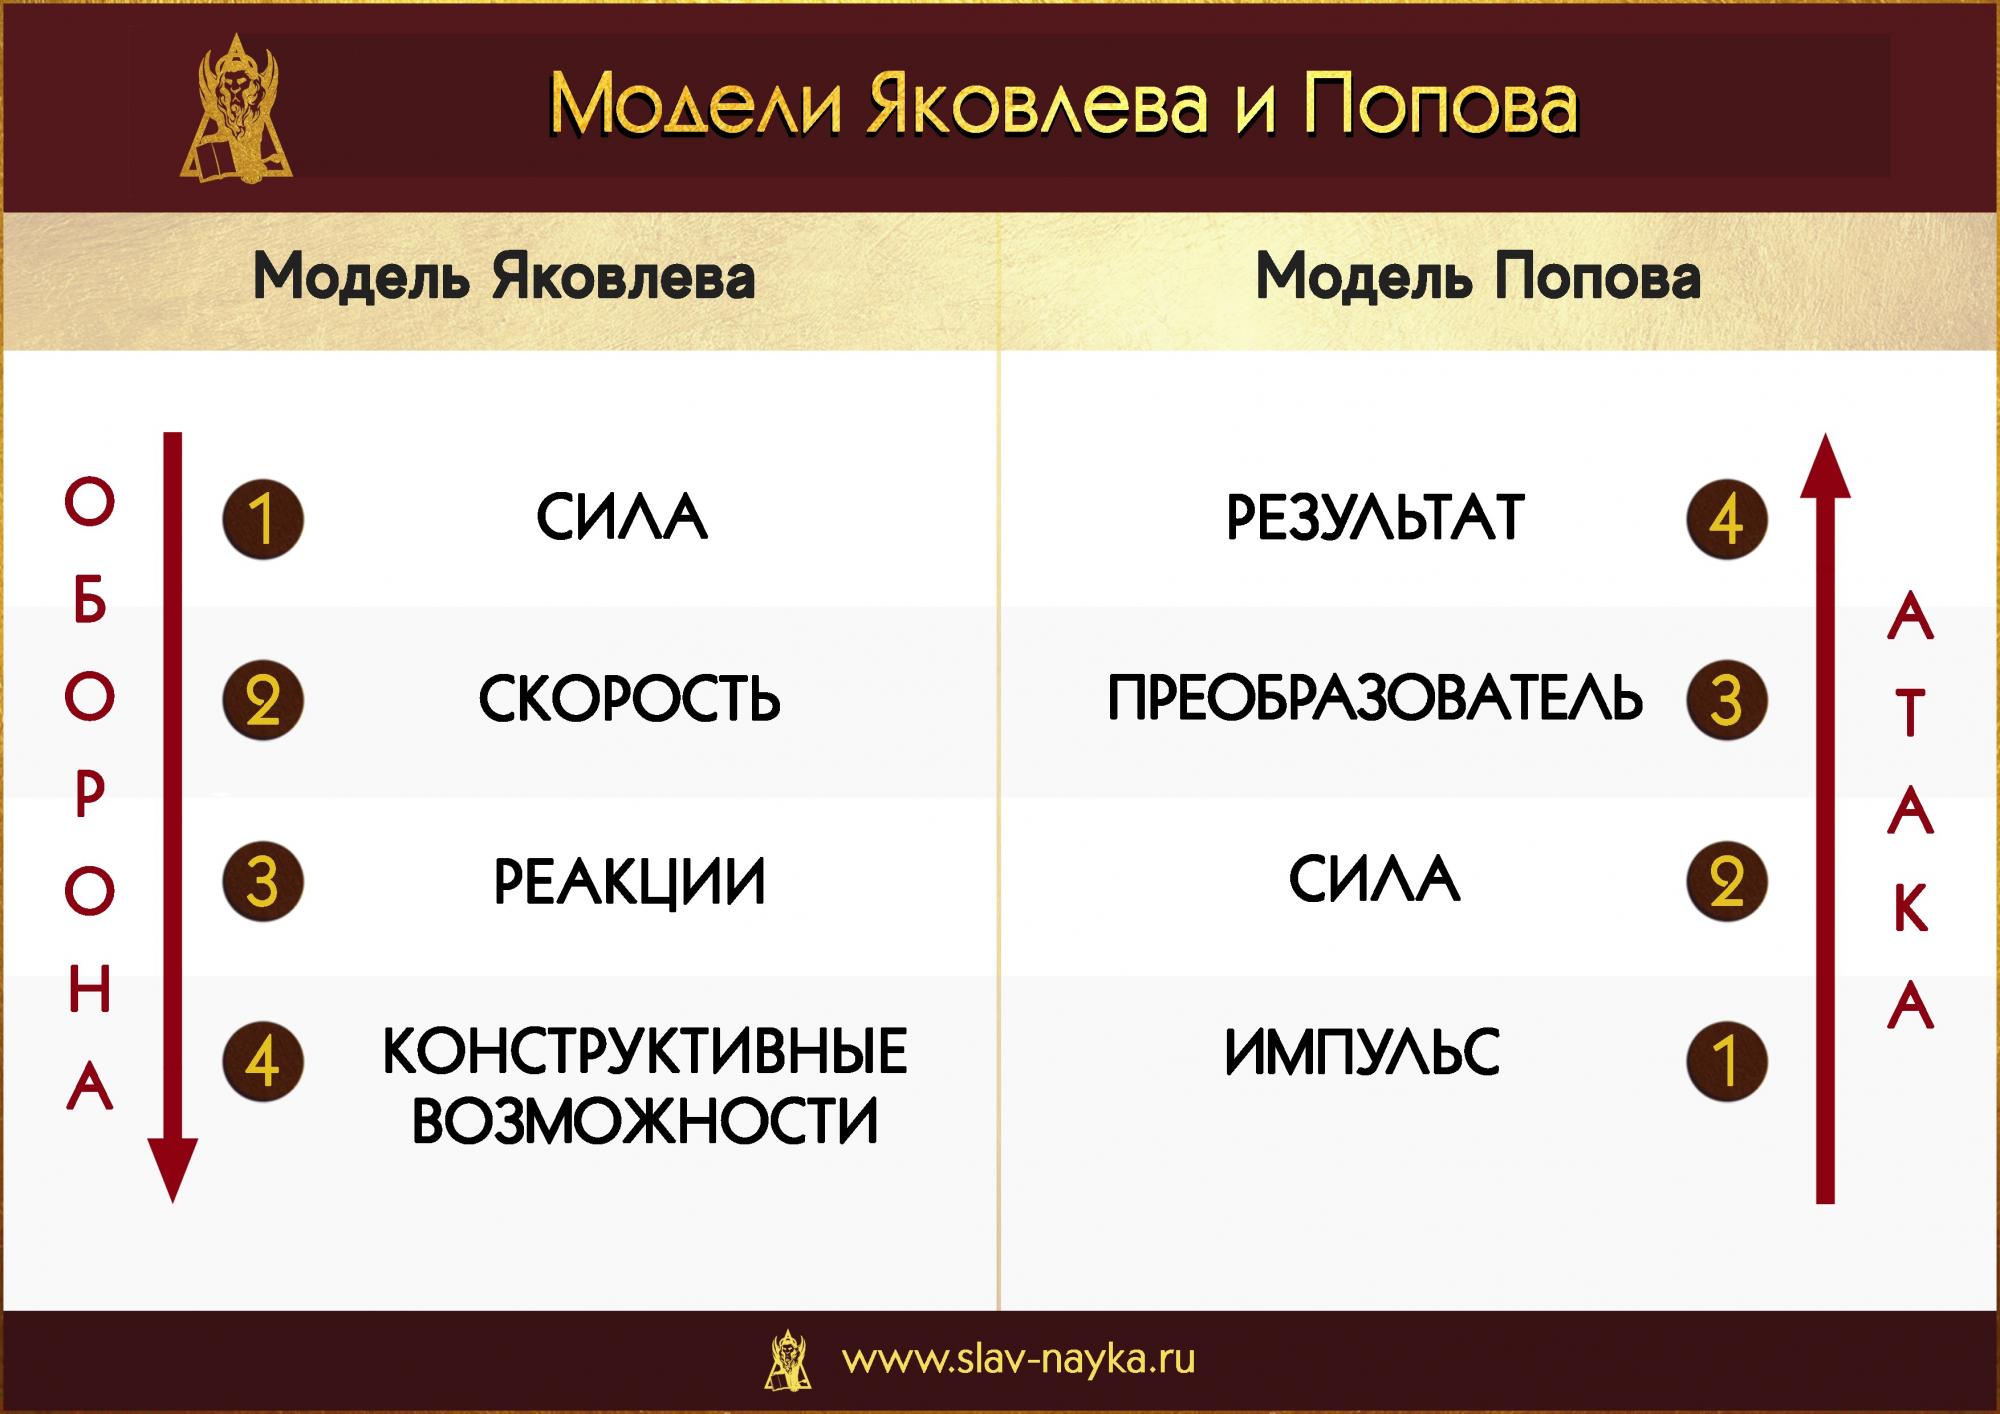 Модели Яковлева и Попова